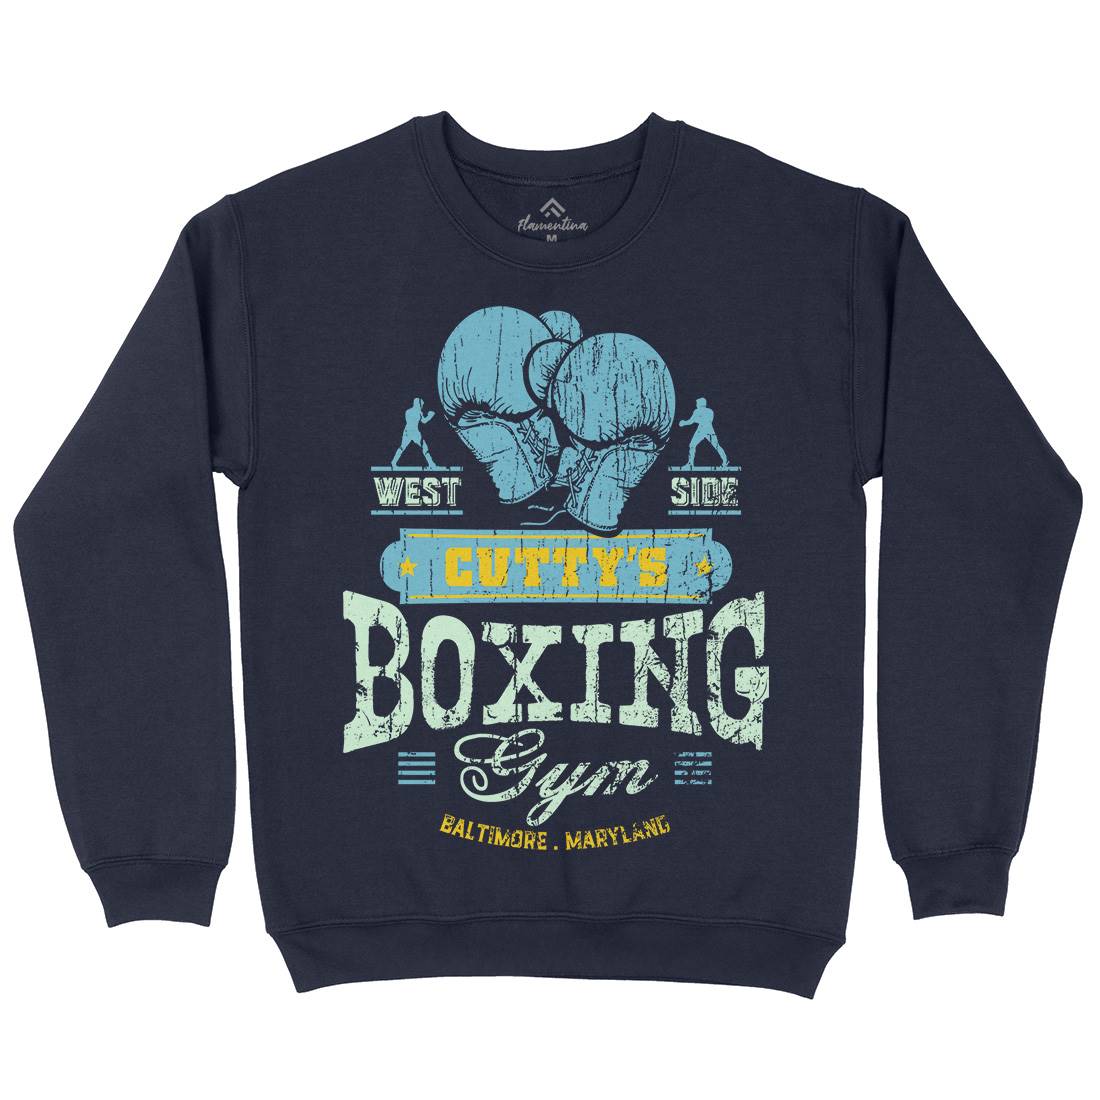 Cuttys Boxing Gym Kids Crew Neck Sweatshirt Sport D187